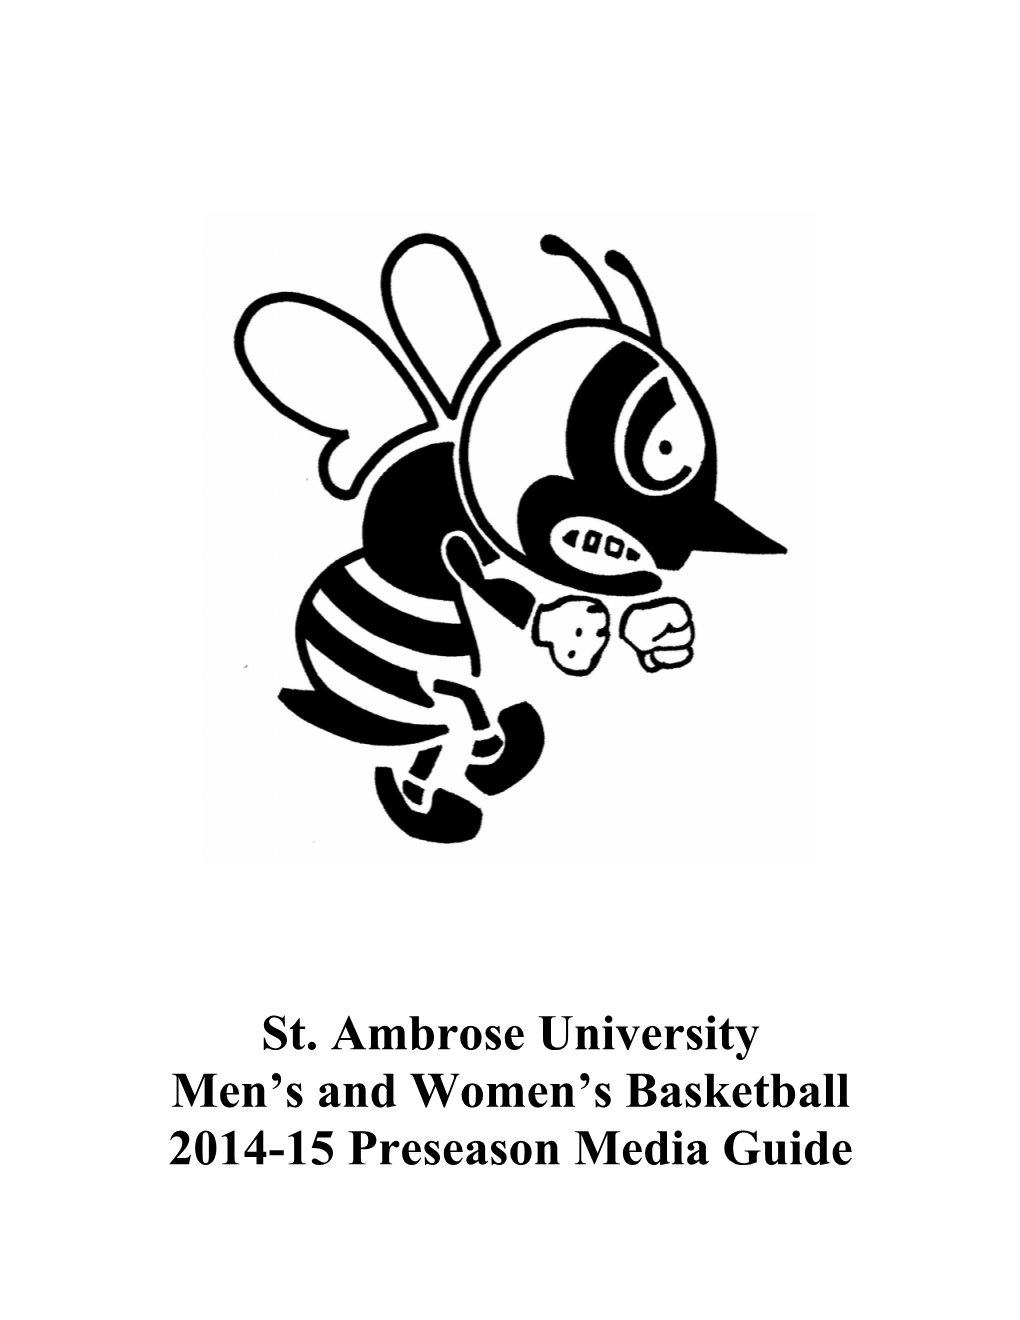 St. Ambrose University Men's and Women's Basketball 2014-15